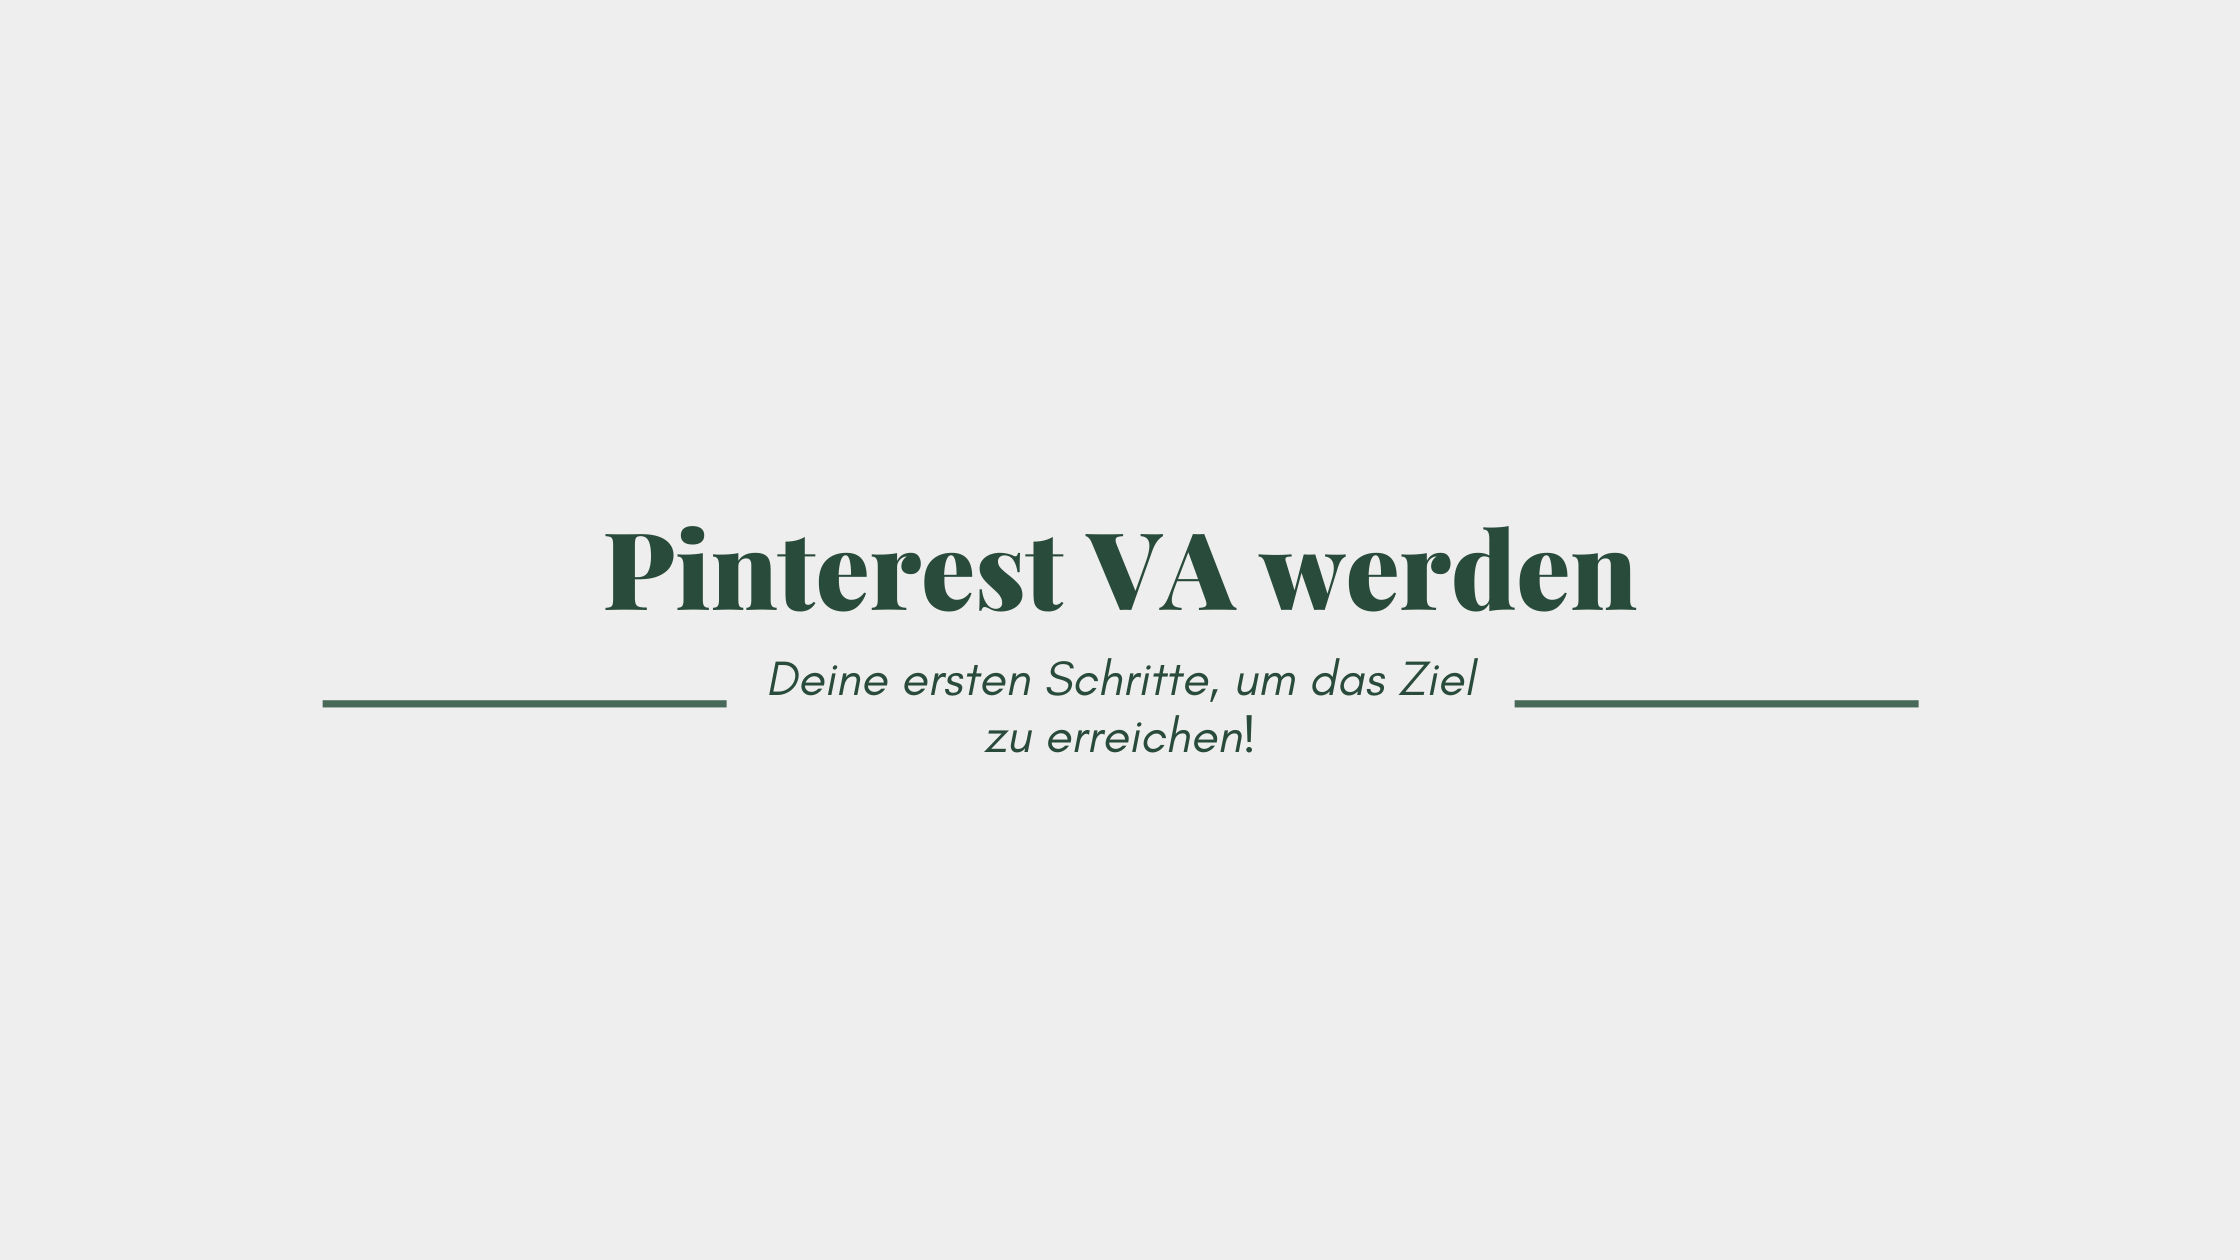 Pinterest VA